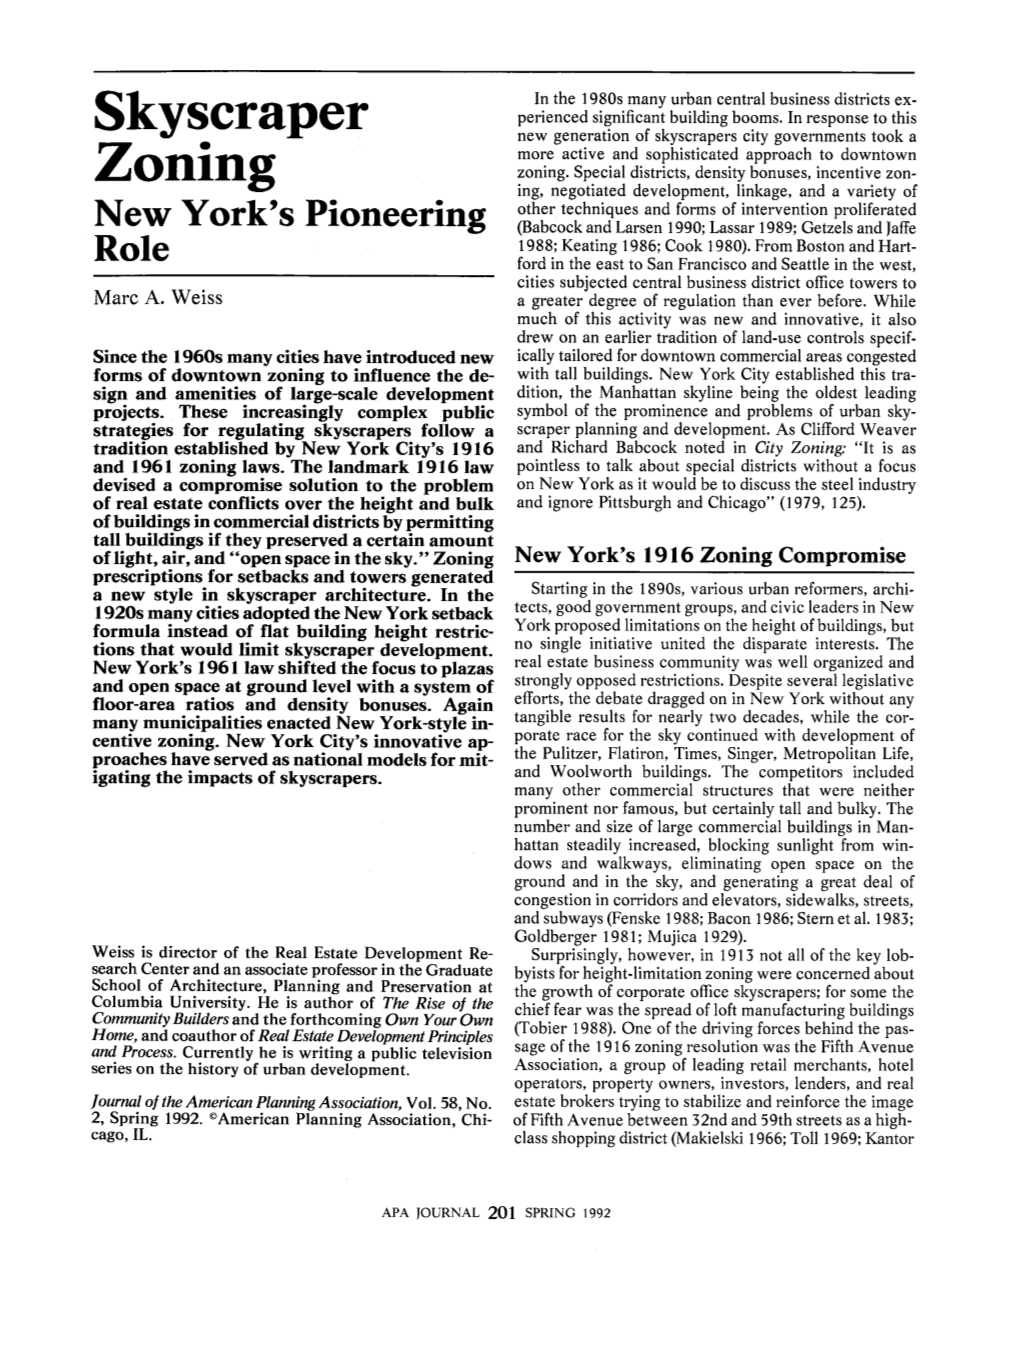 Skyscraper Zoning: New York’S Pioneering Role